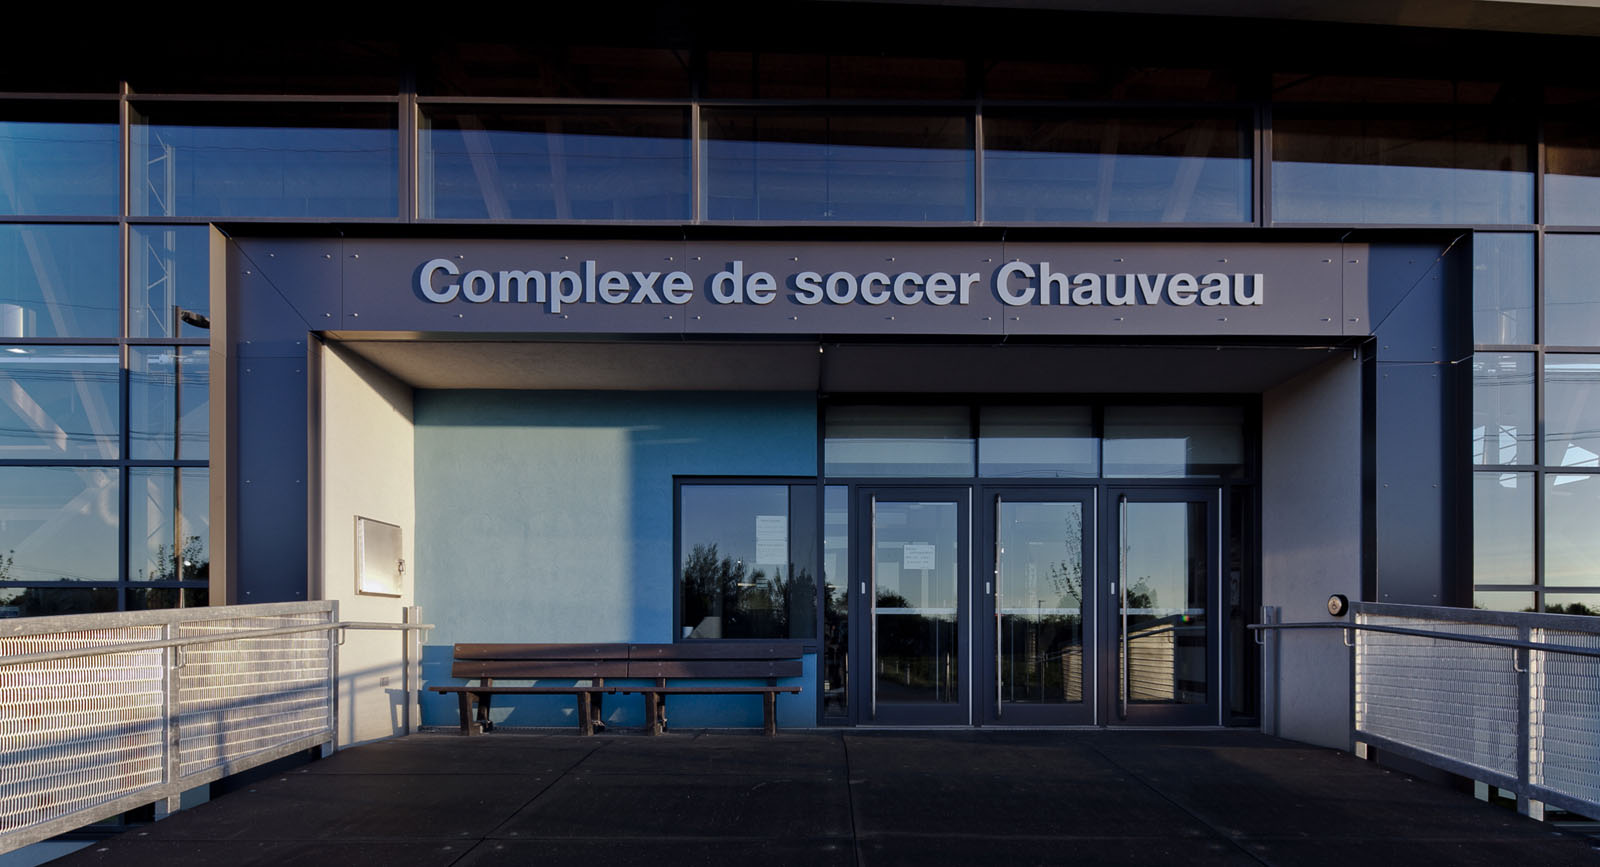 Chauveau soccer stadium